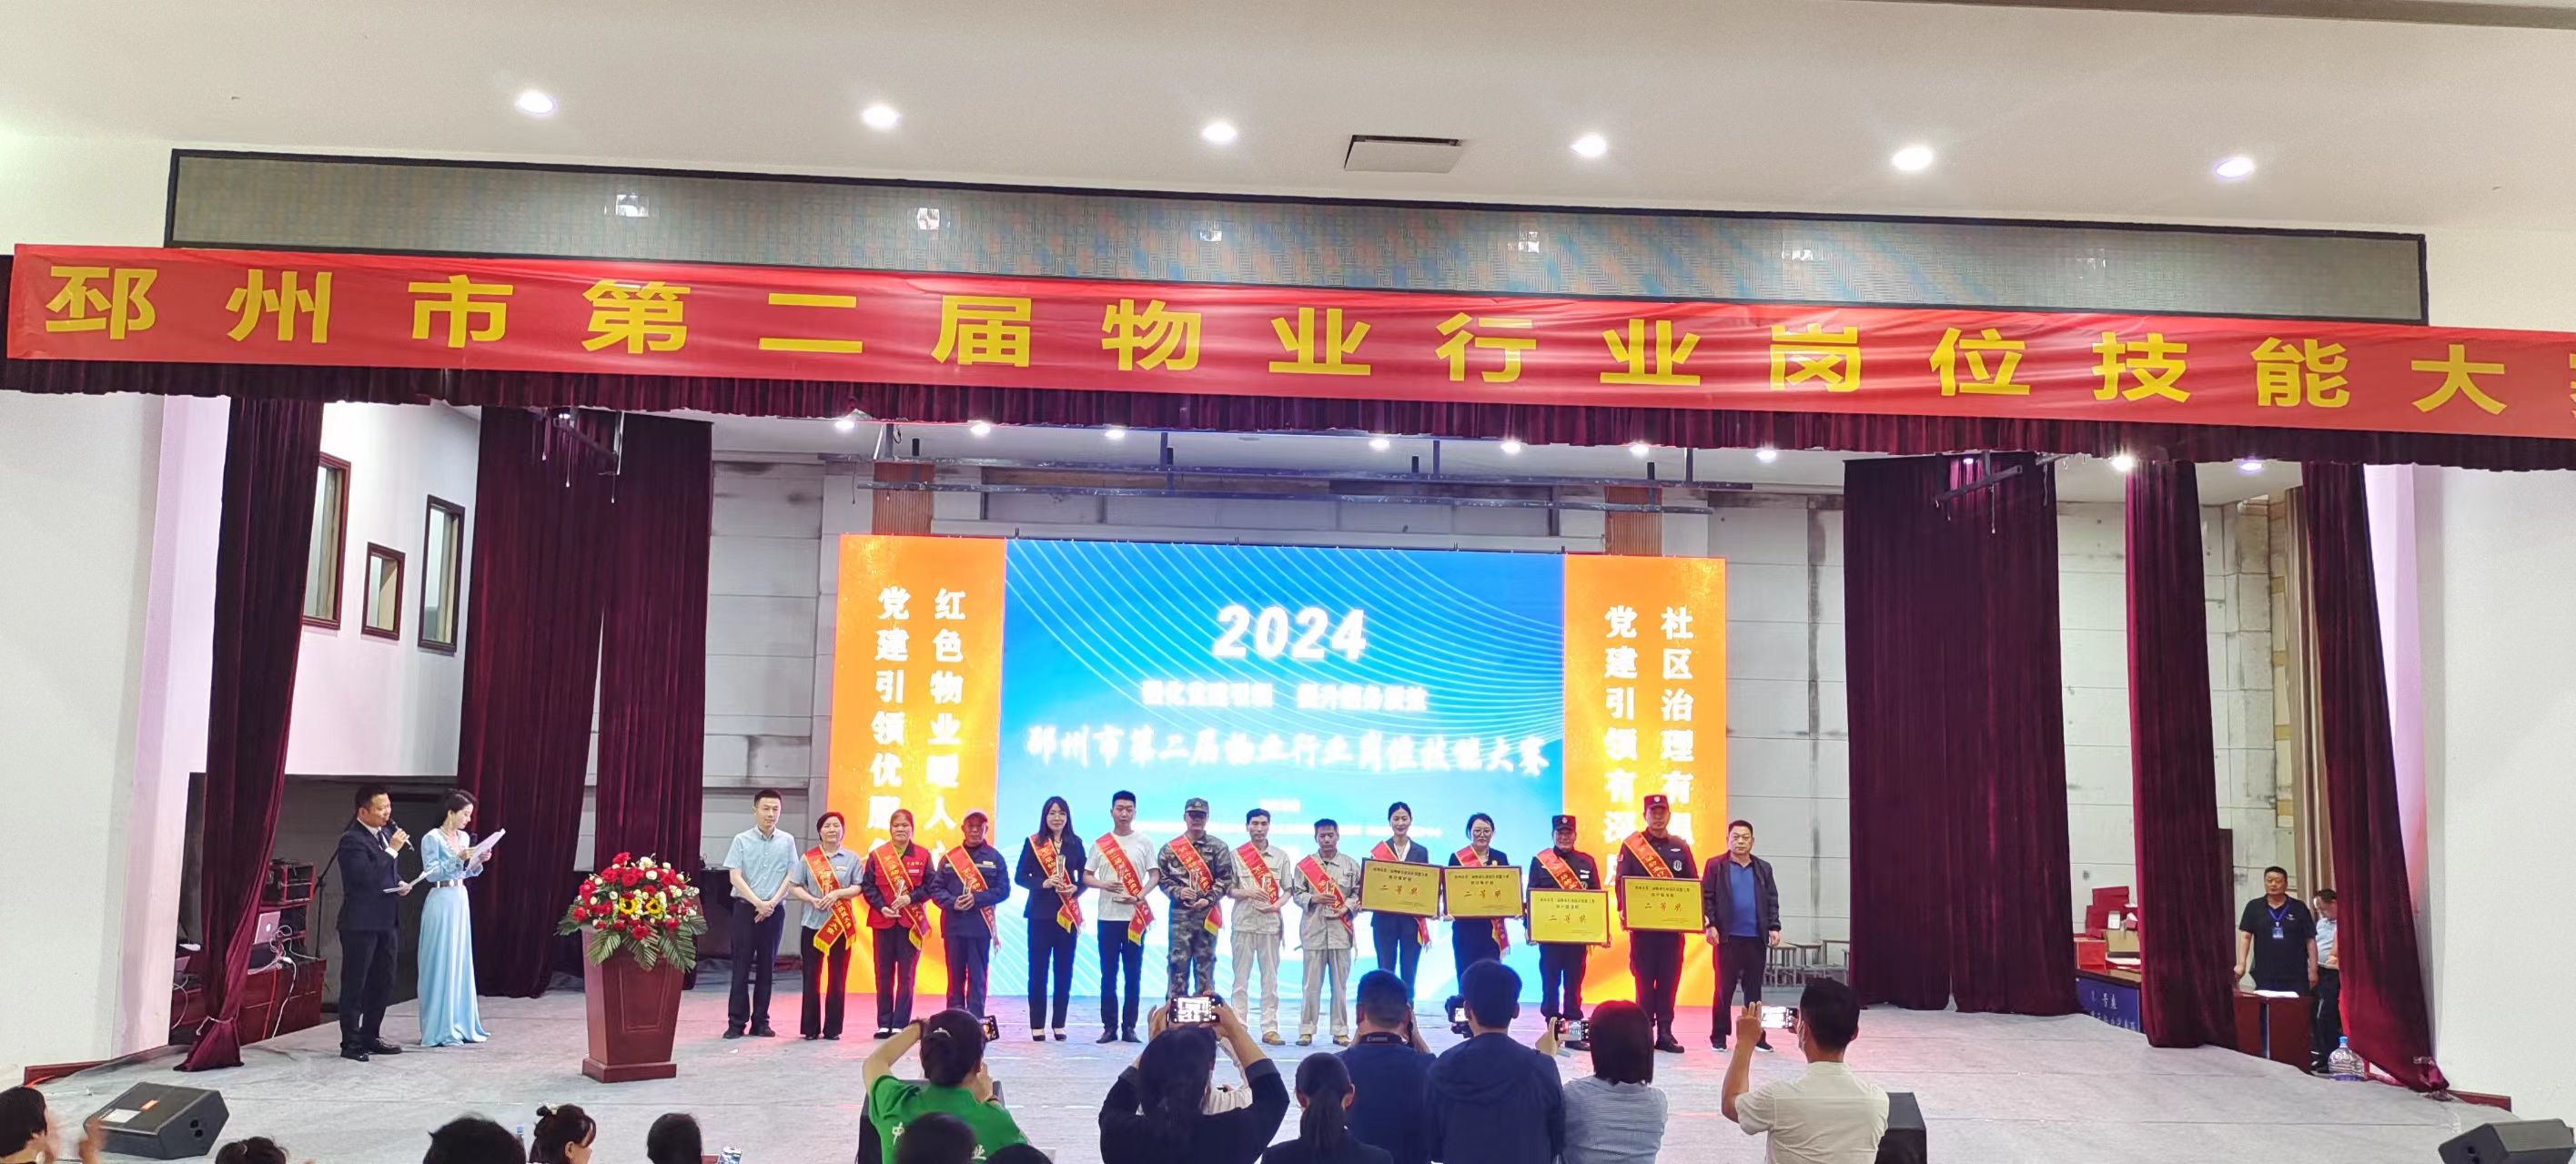 Second Pizhou City Property Management Skills Competition: Jiayuan Property Wins Medals